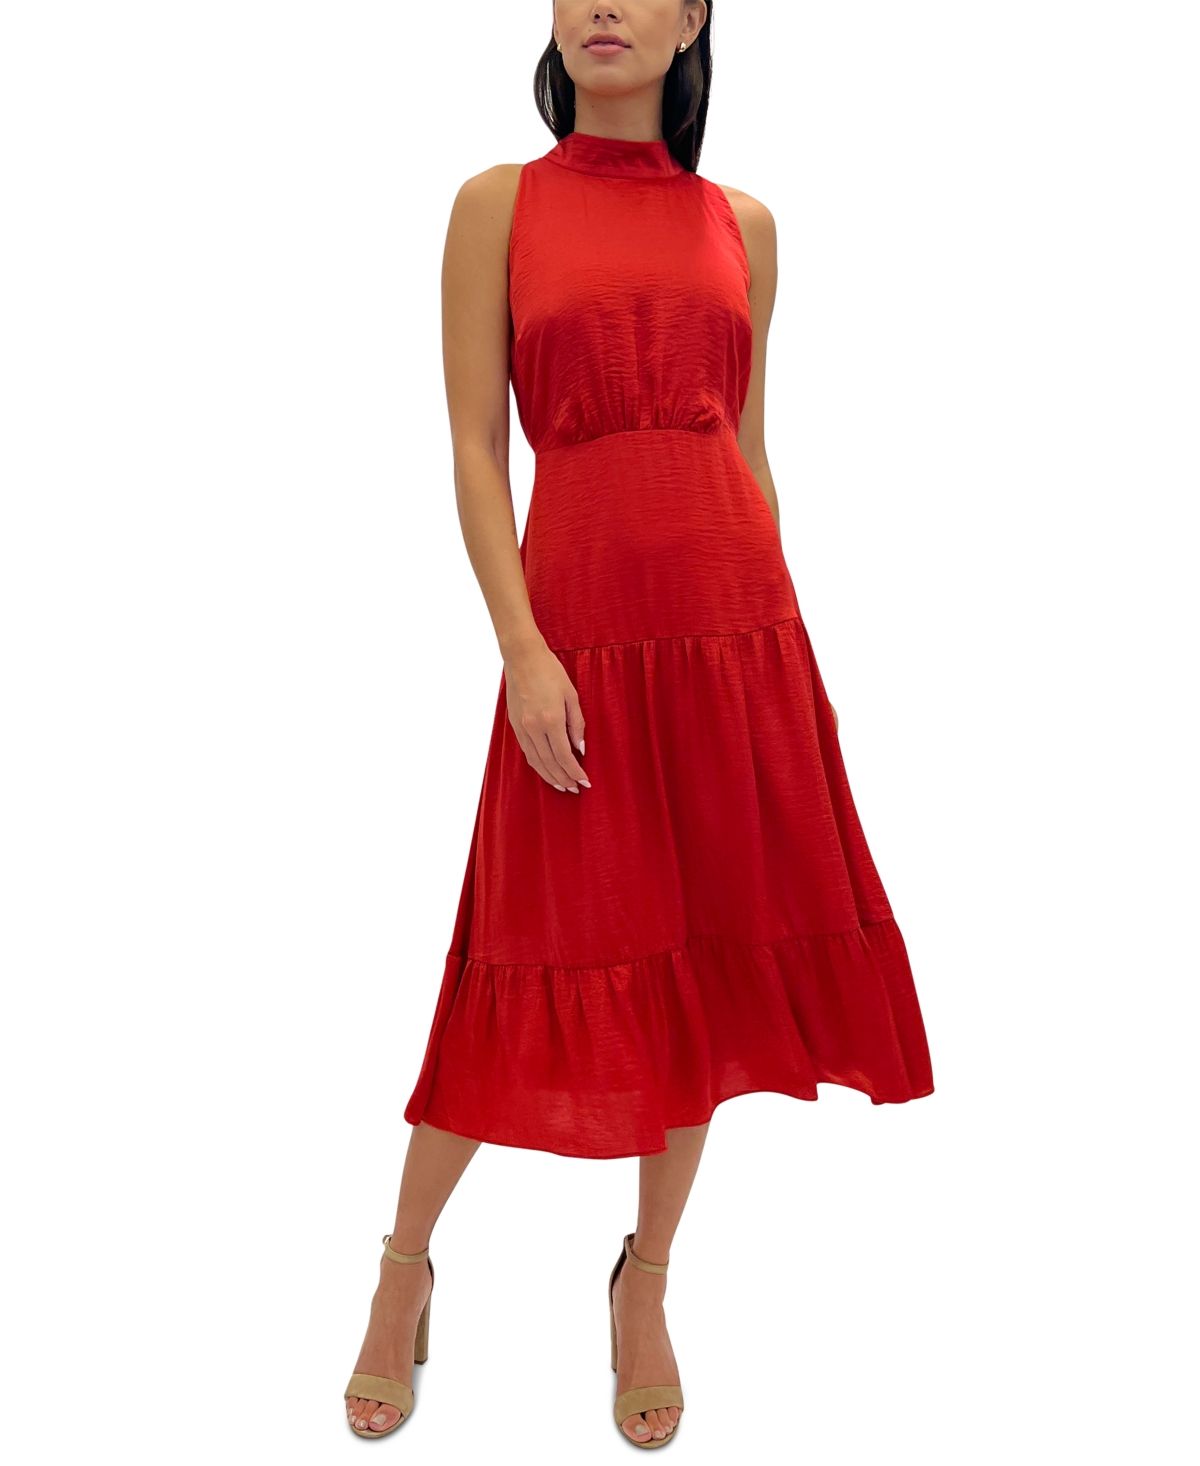 Sam Edelman Women's Dress Sz 6 High-Neck Sleeveless Chiffon Red